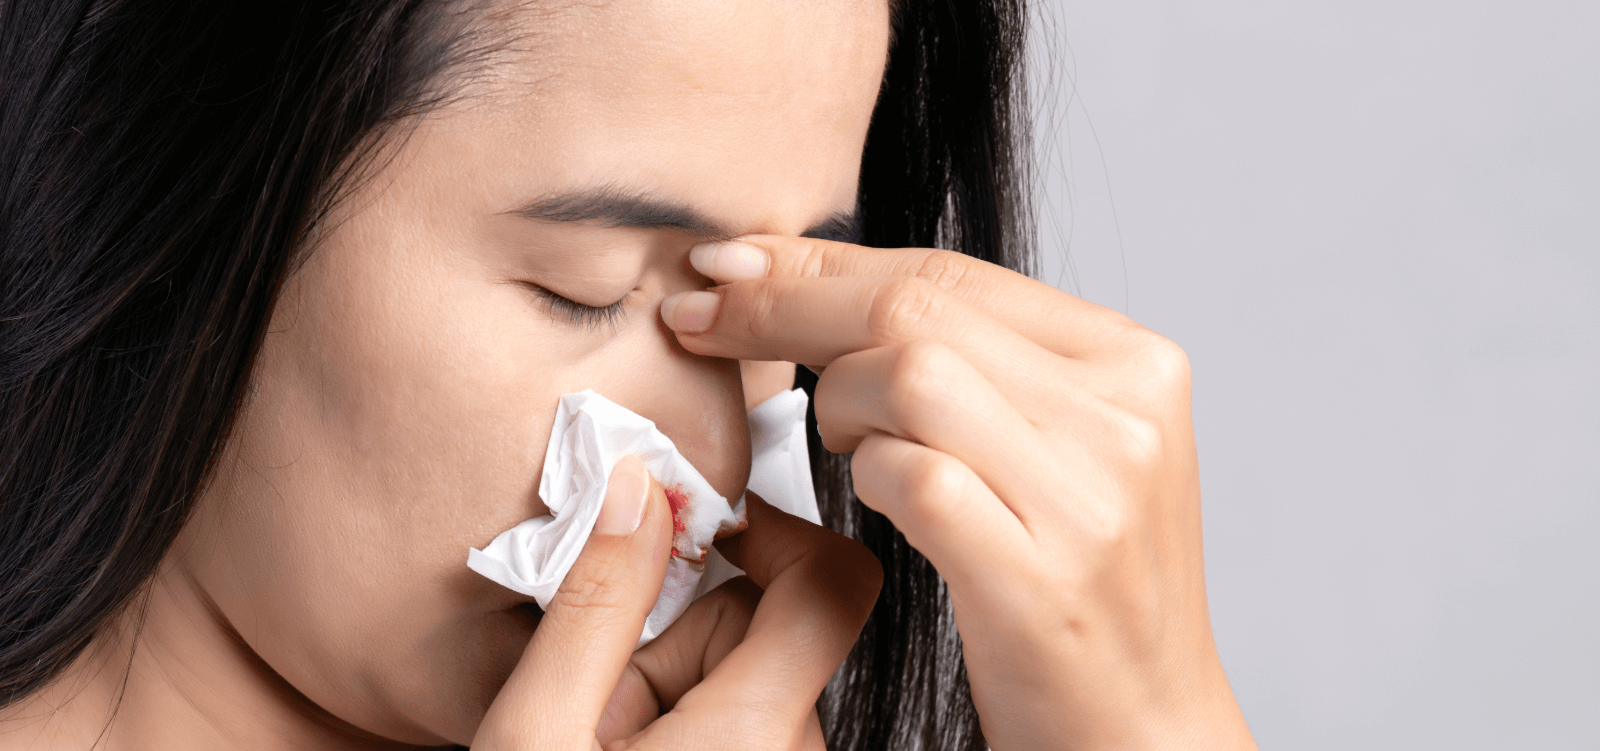 Bleeding Nose: An Unusual Anxiety Symptom